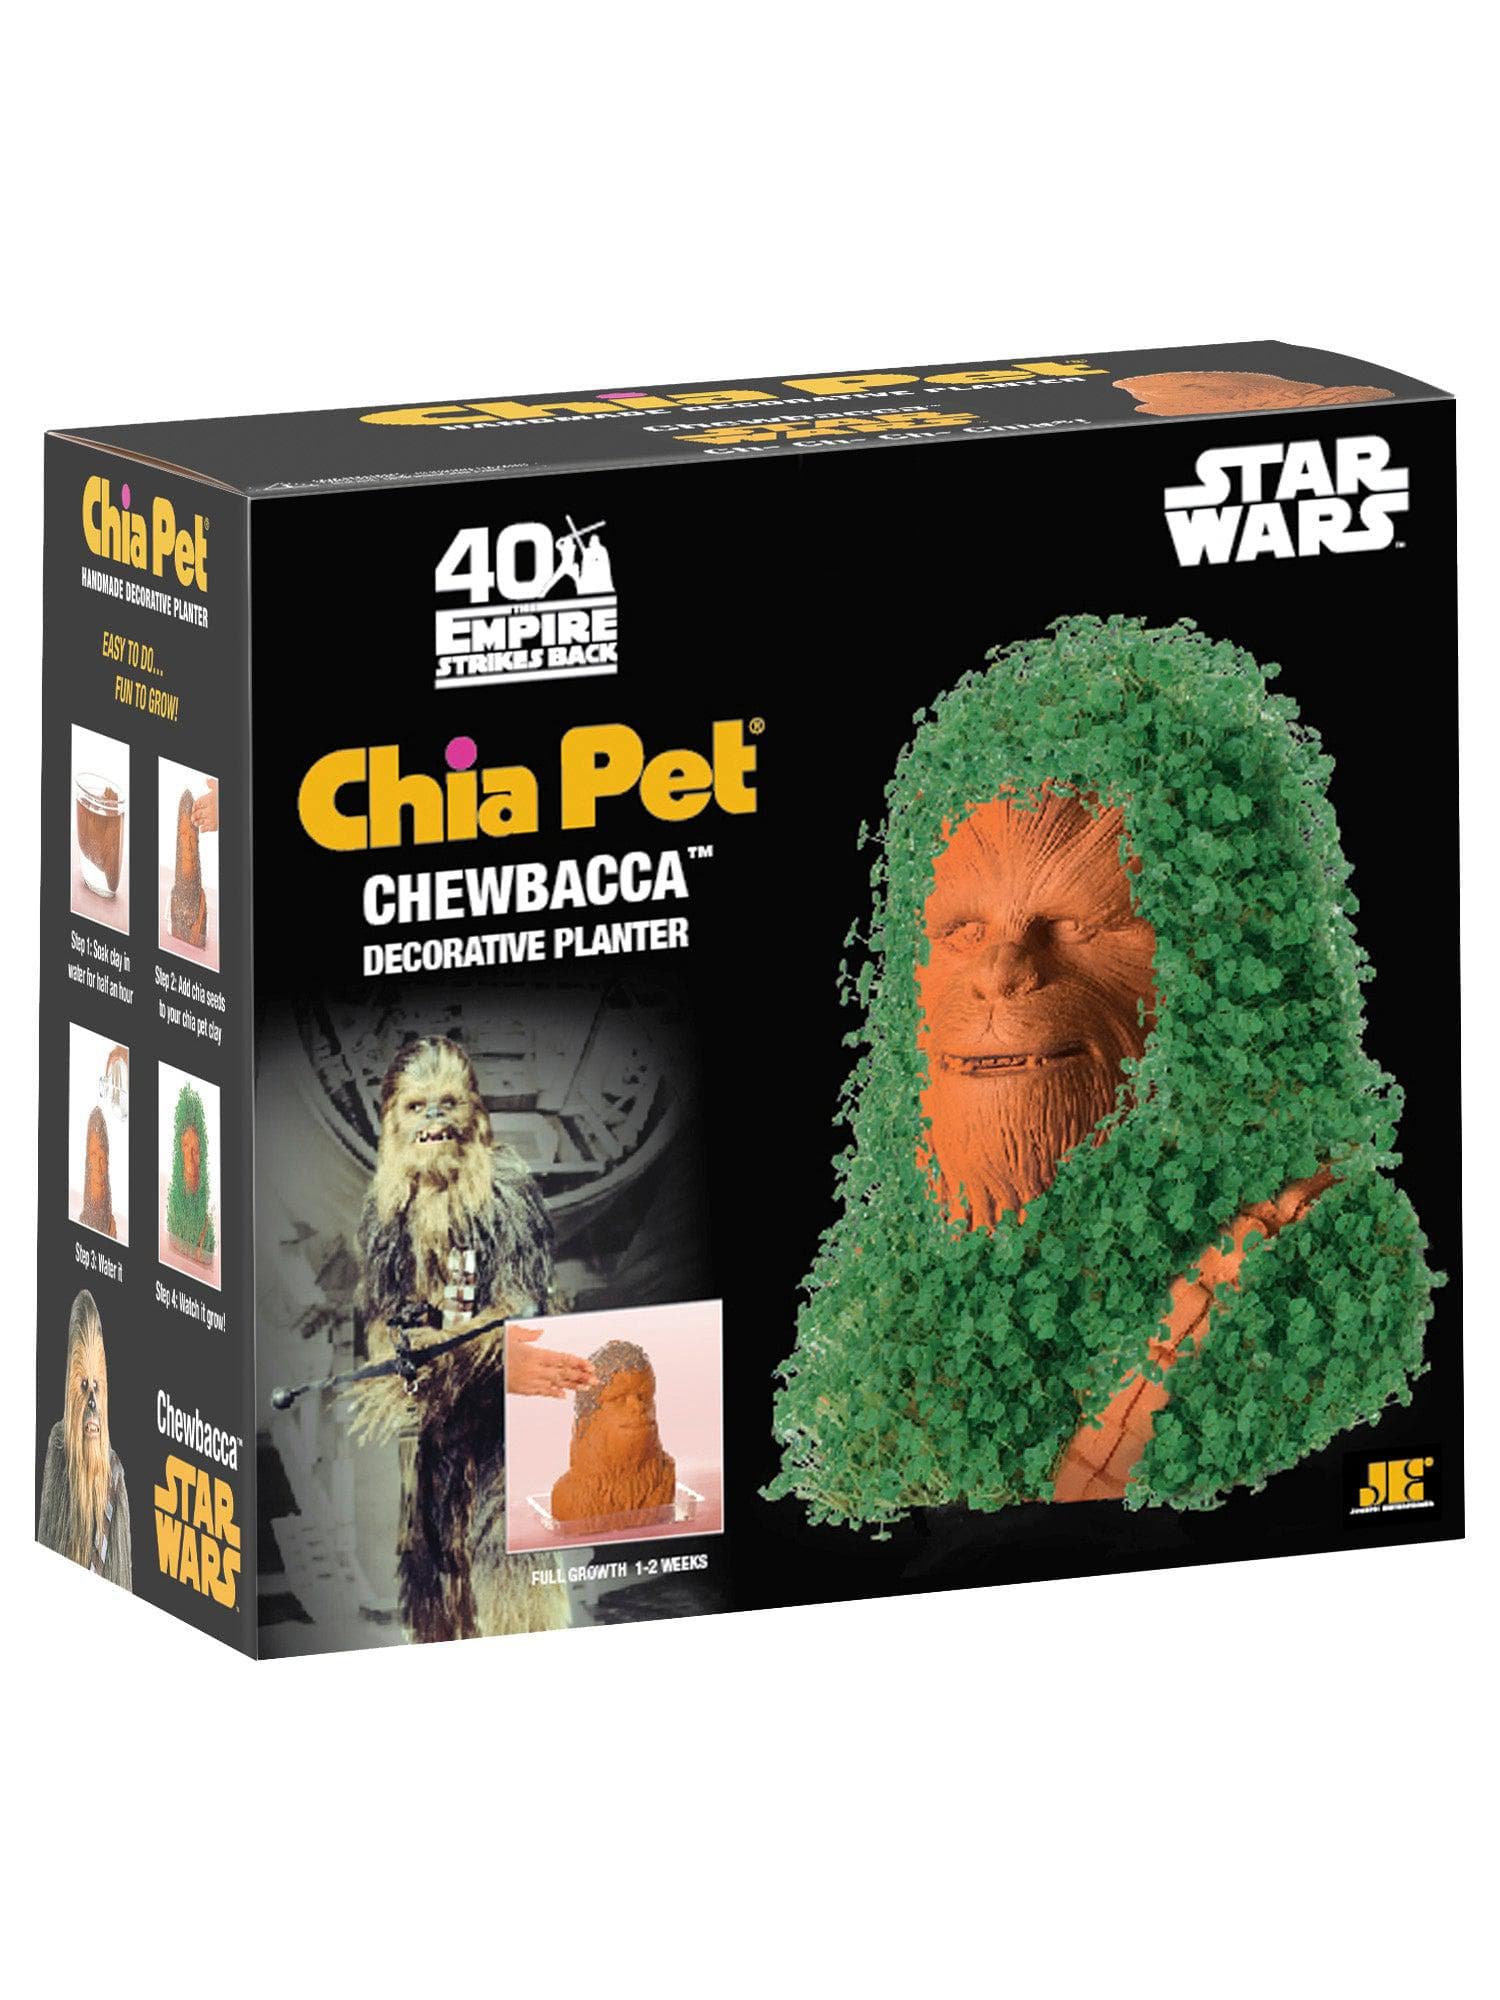 Star Wars Chewbacca Chia Pet - costumes.com